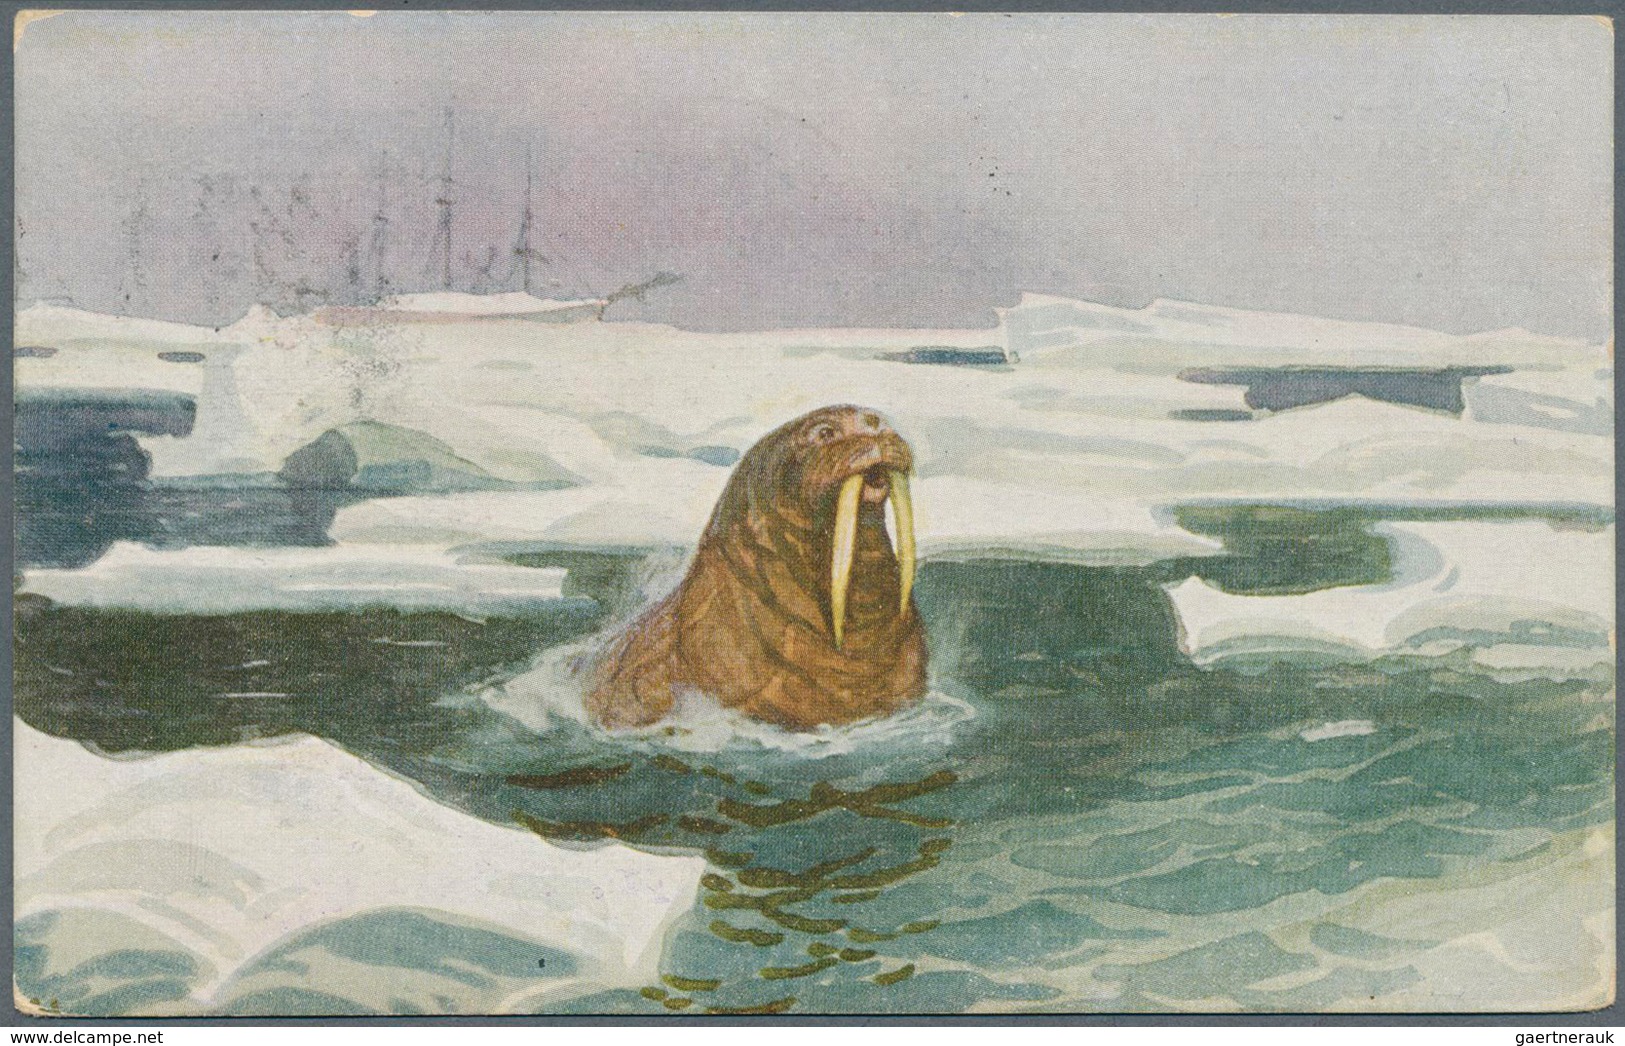 10163 Thematik: Arktis & Antarktis / arctic & antarctic: 1918, Norway. Lot of 5 different FRAM-cards. All